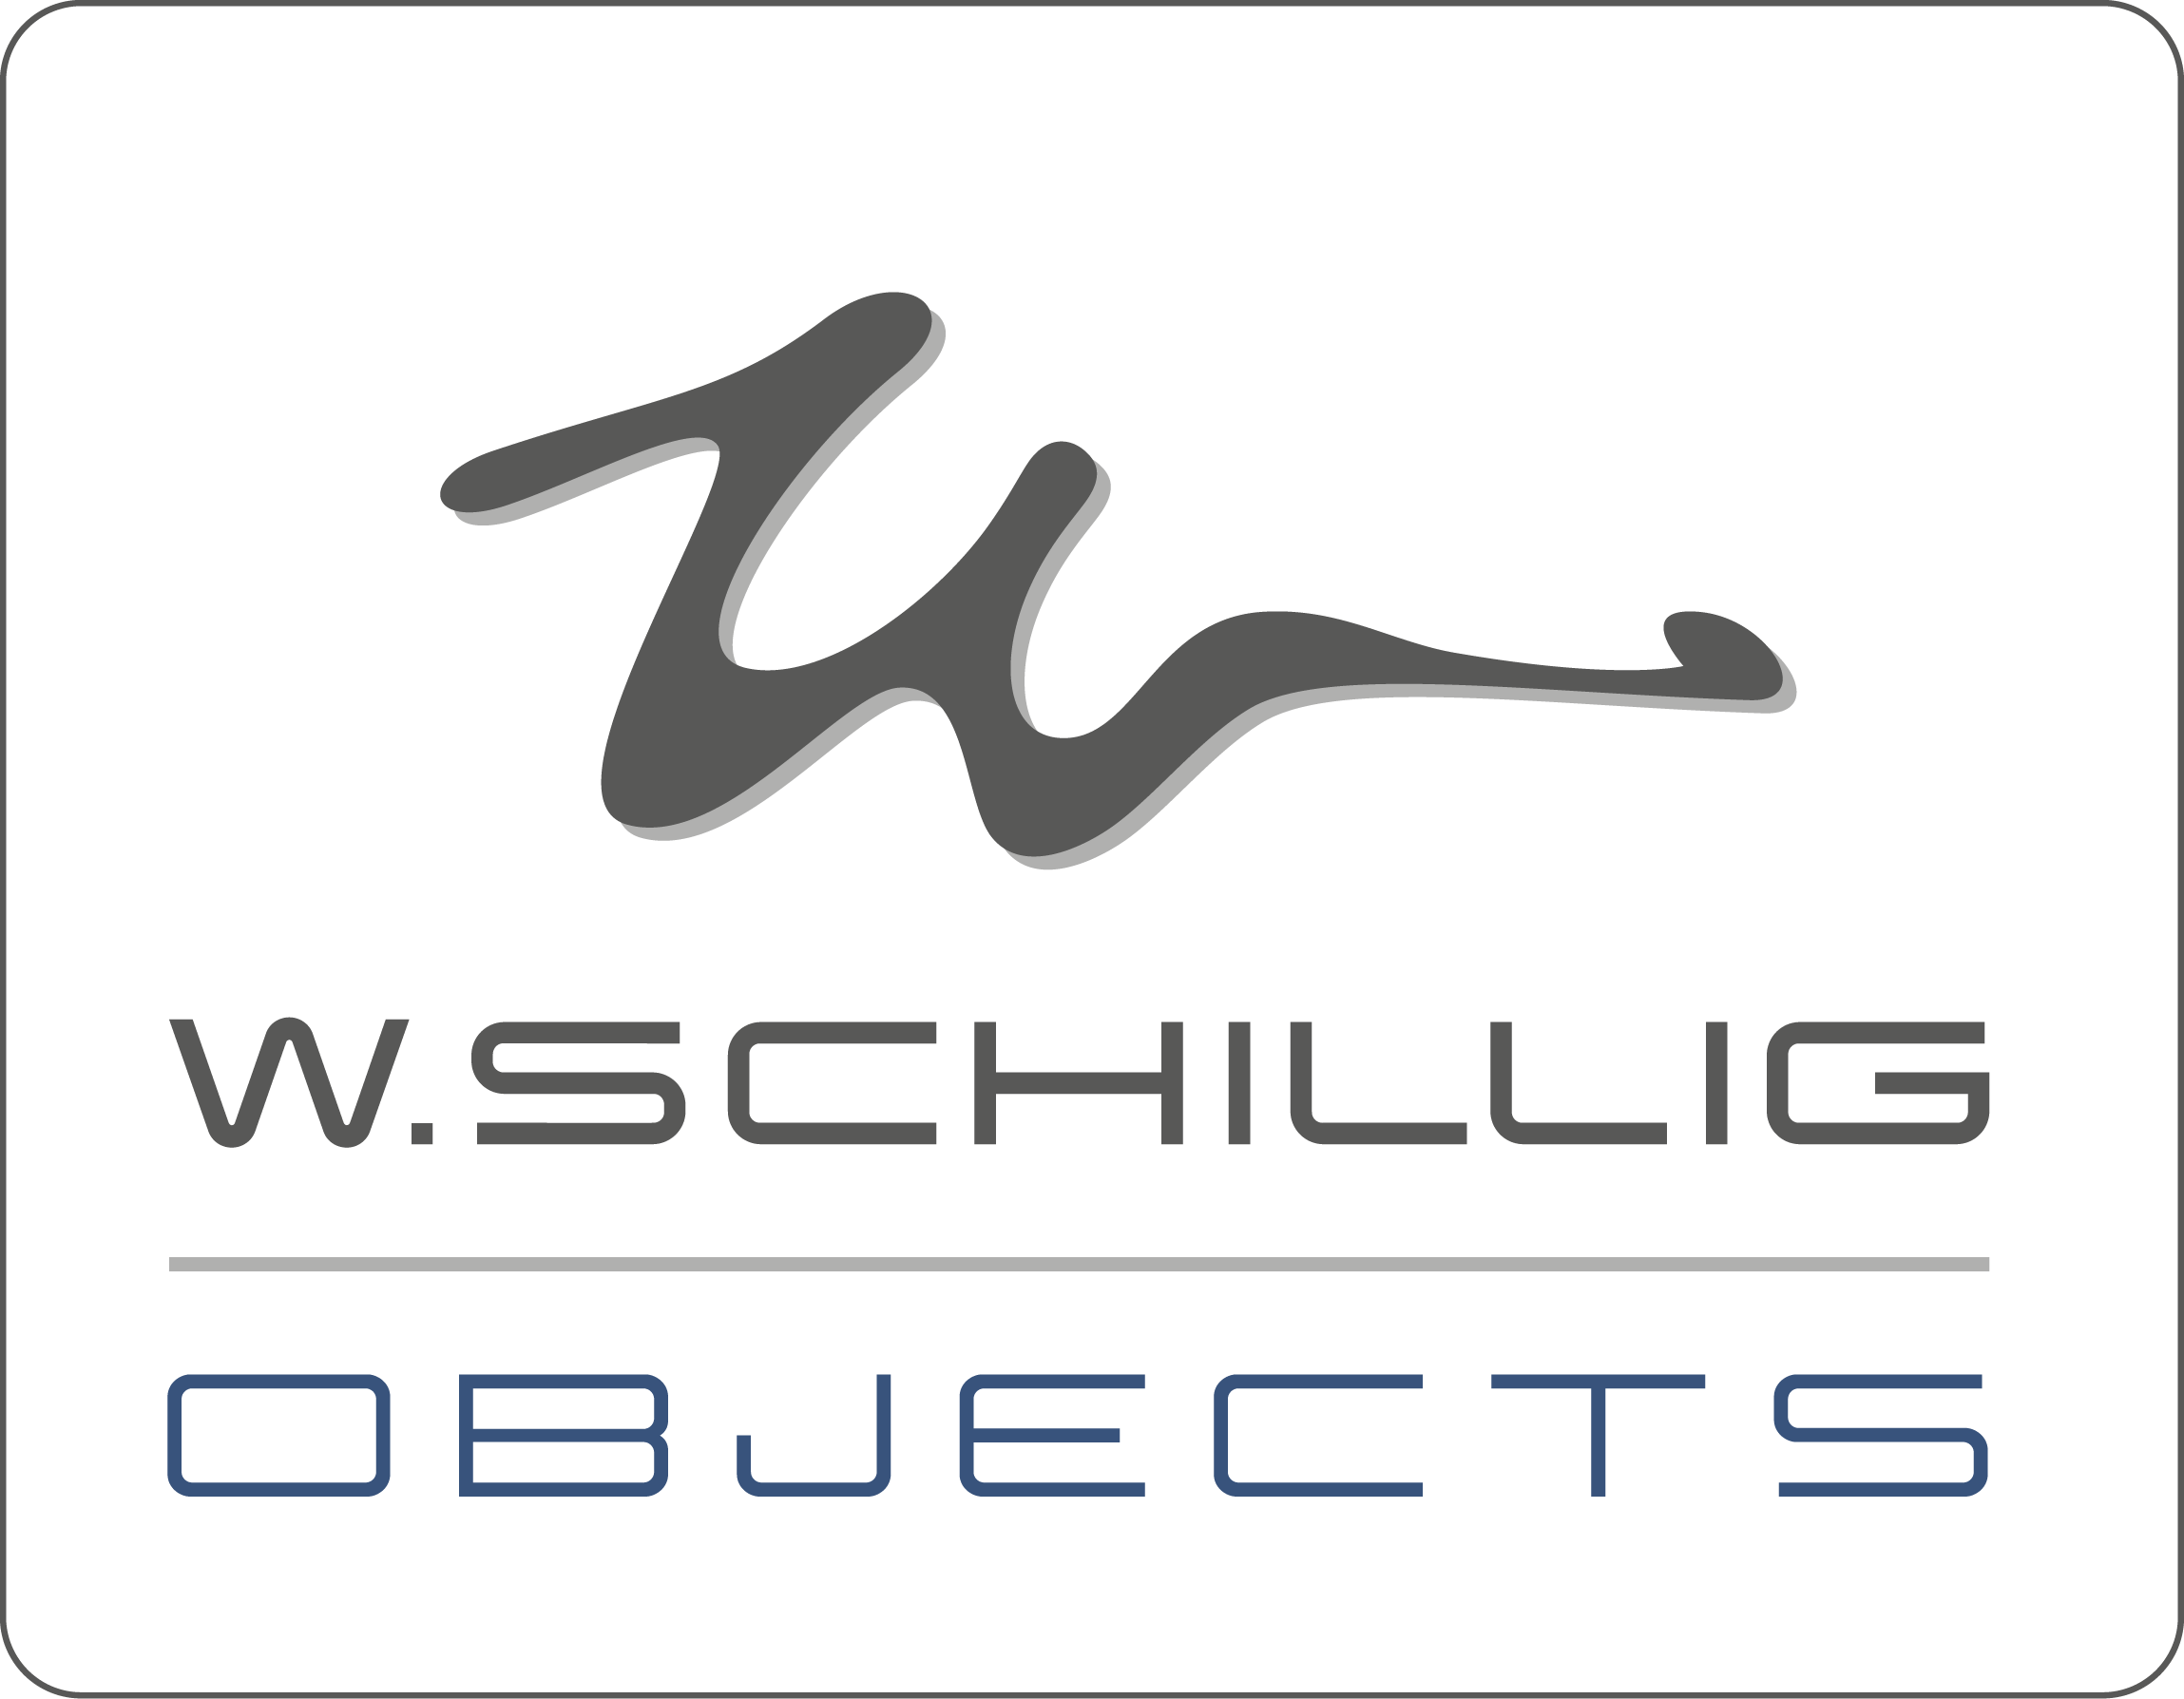 Useful information | W.SCHILLIG objects